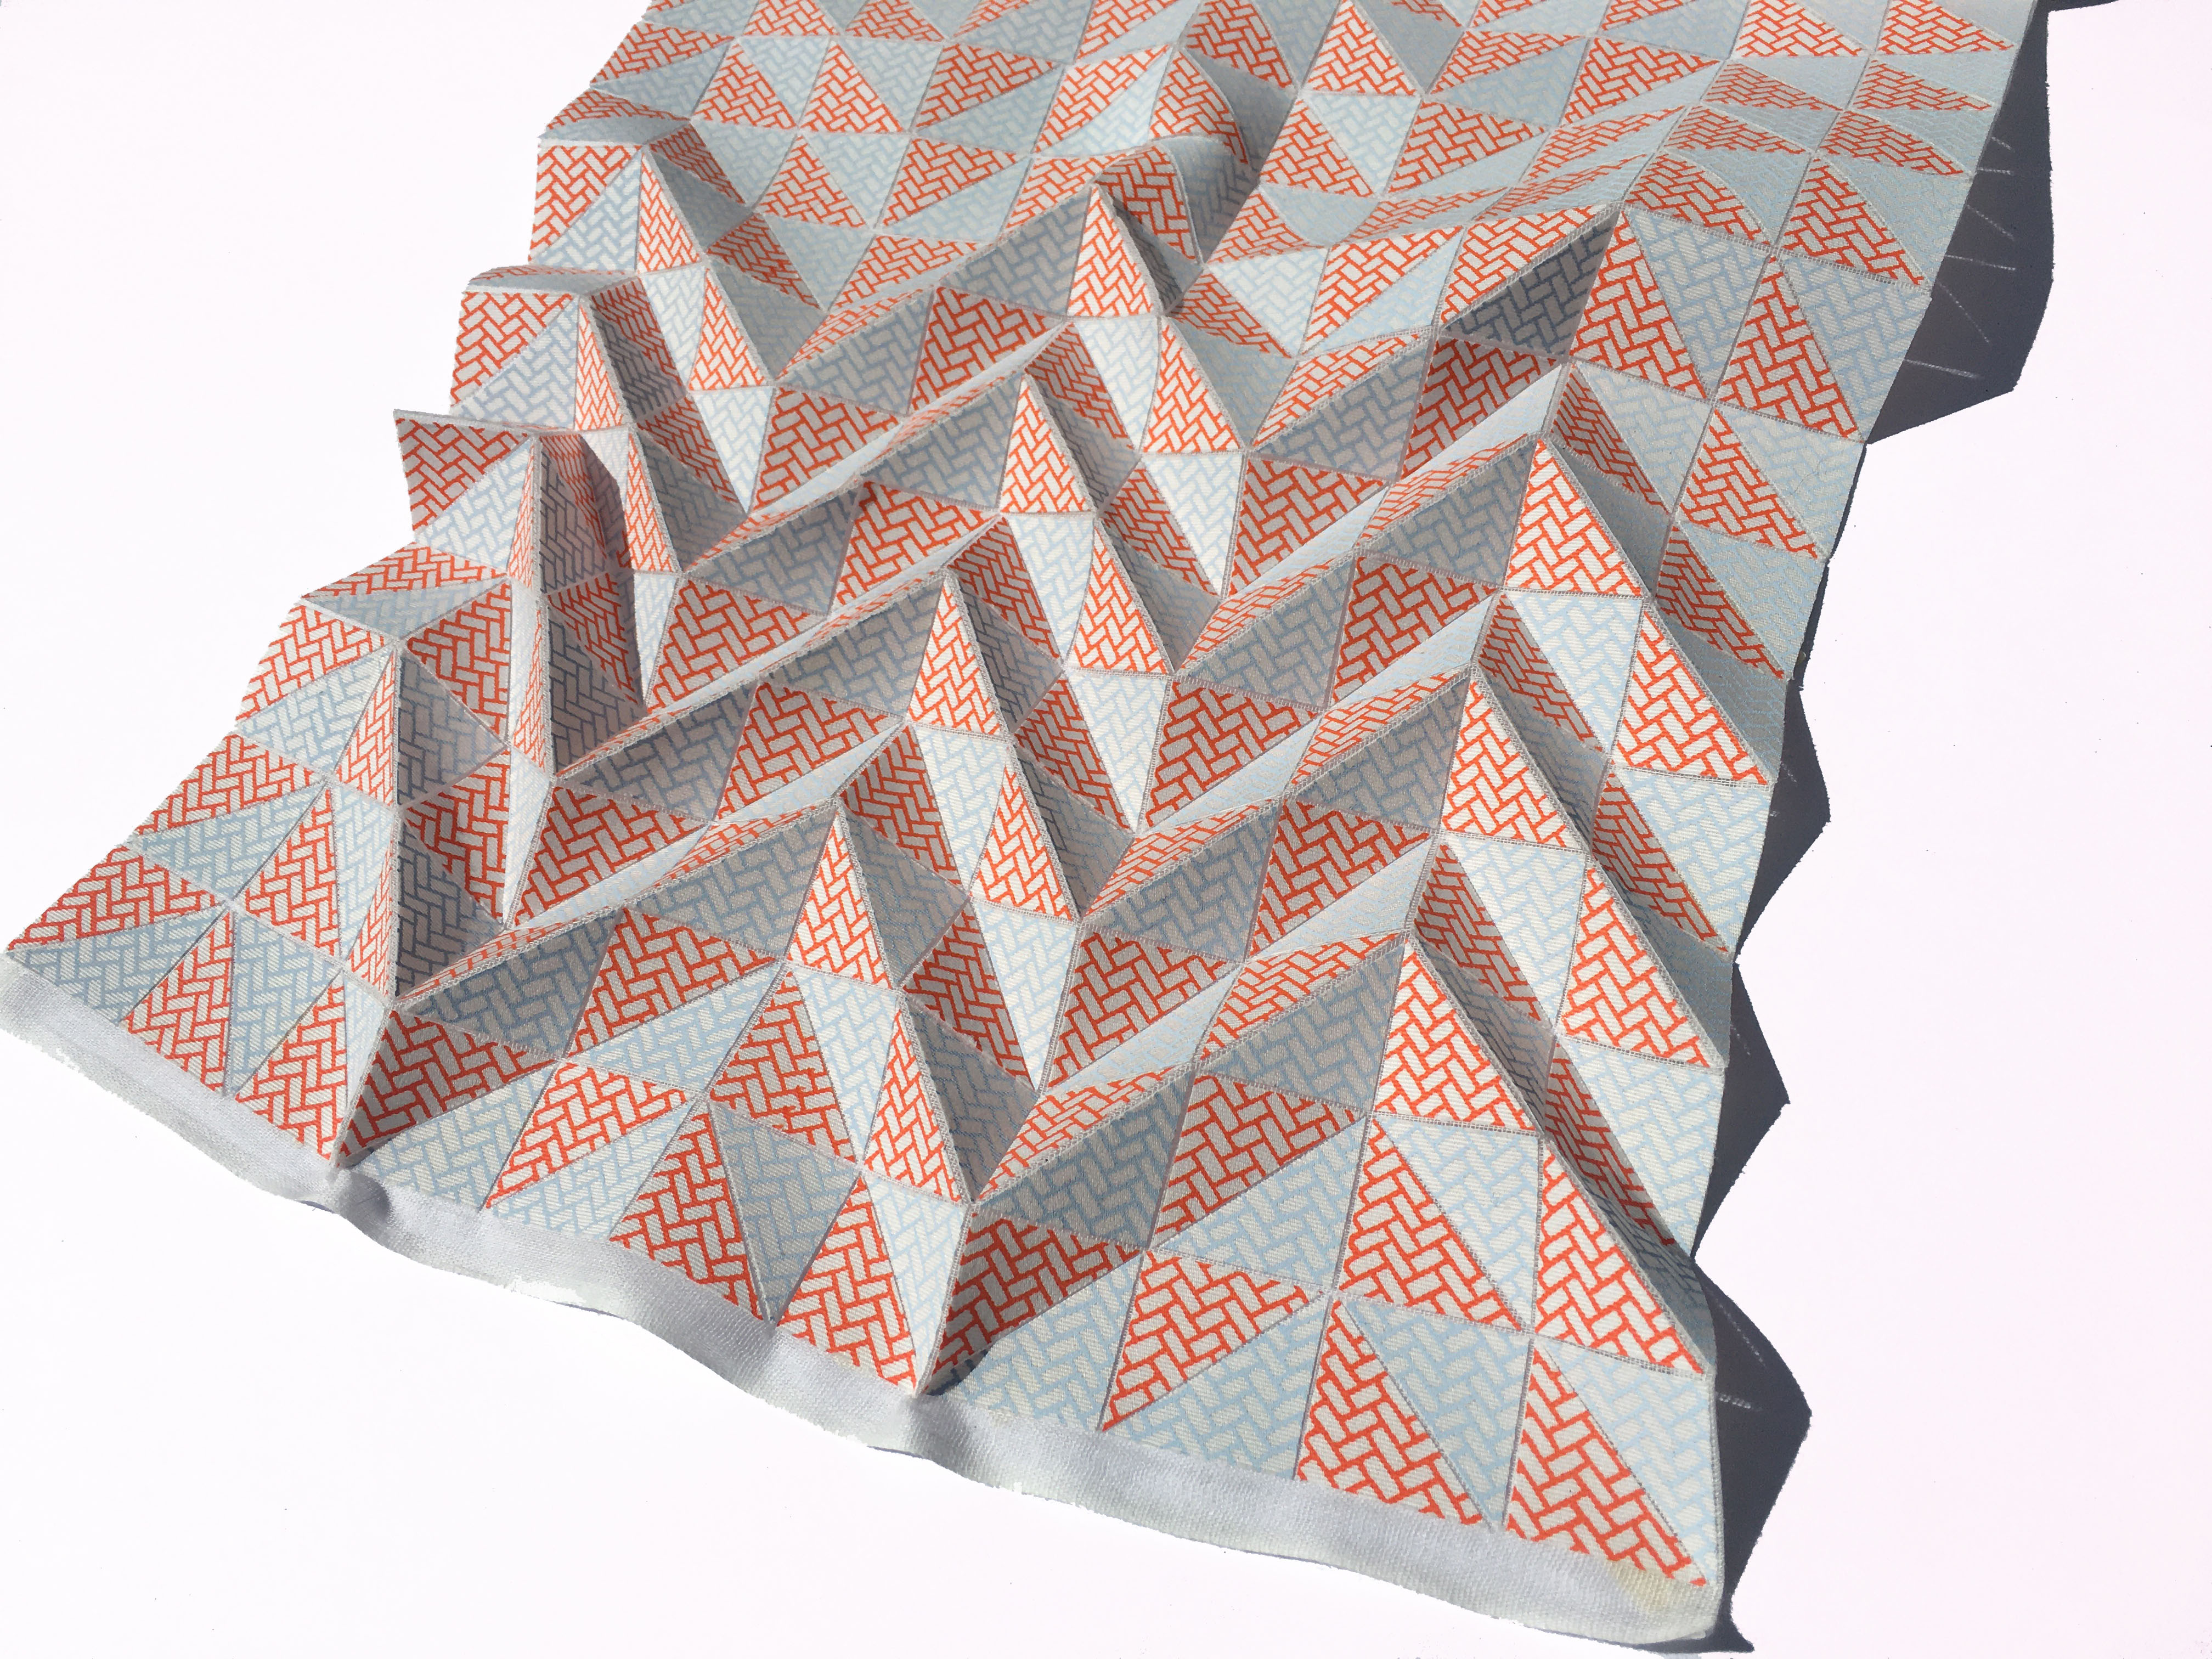 Screen-printed 3D Fabric Manipulation